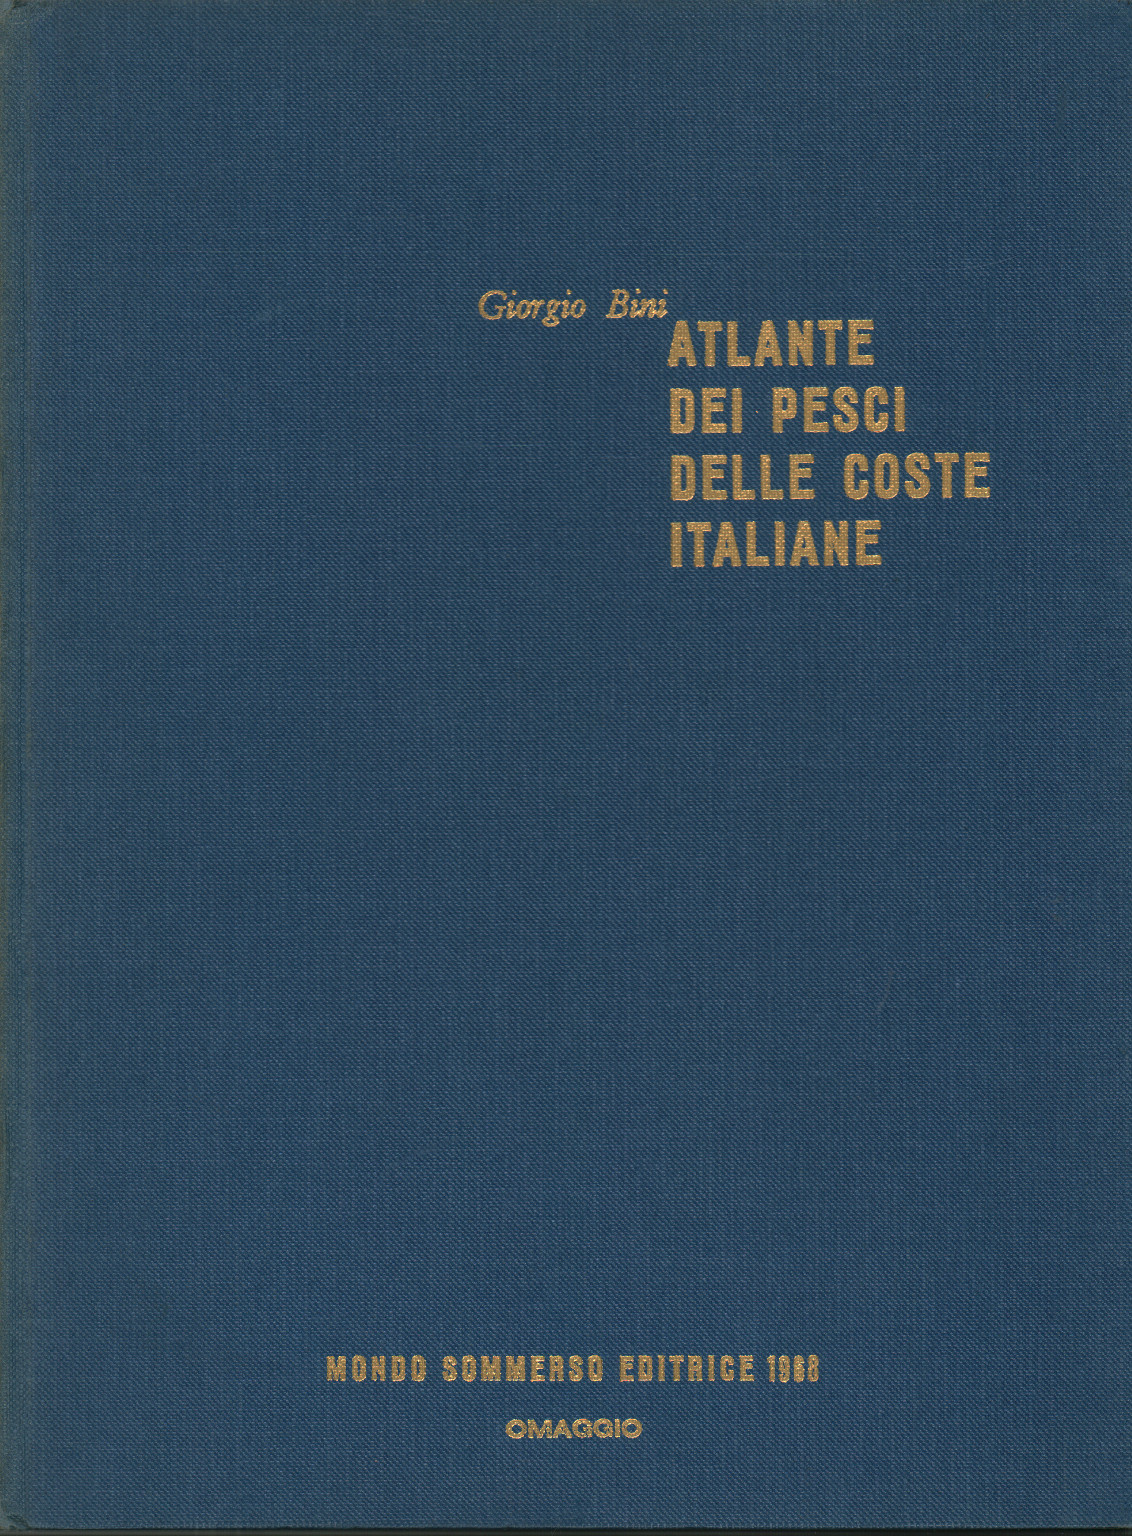 Atlas des poissons des côtes italiennes Volume VI, Giorgio Bini